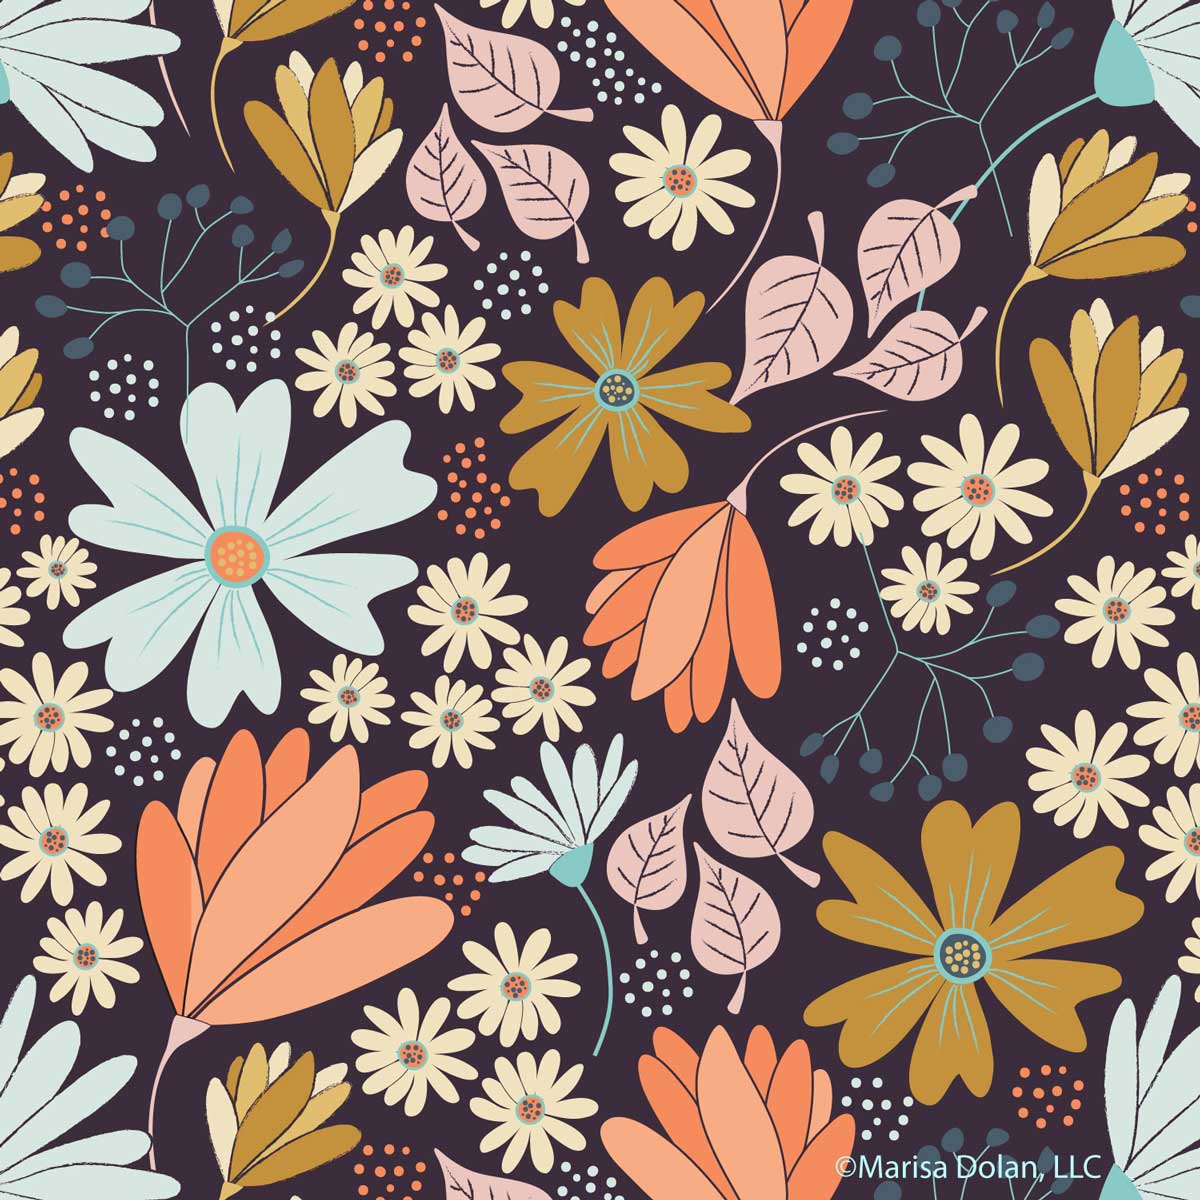 Wildflowers pattern design, seamless repeat